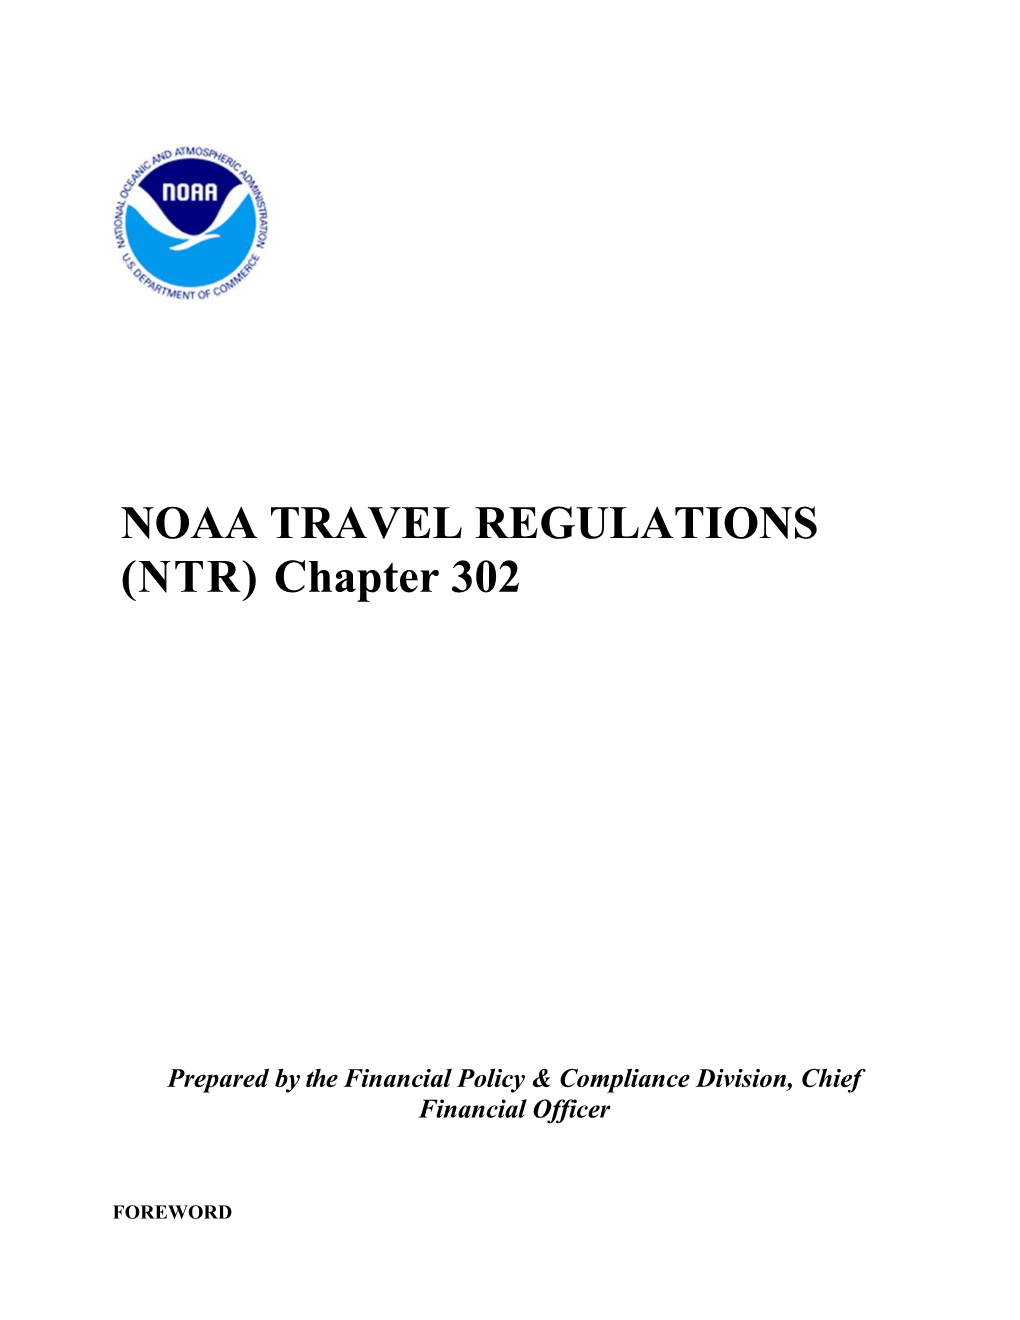 NOAA TRAVEL REGULATIONS(NTR) Chapter 302